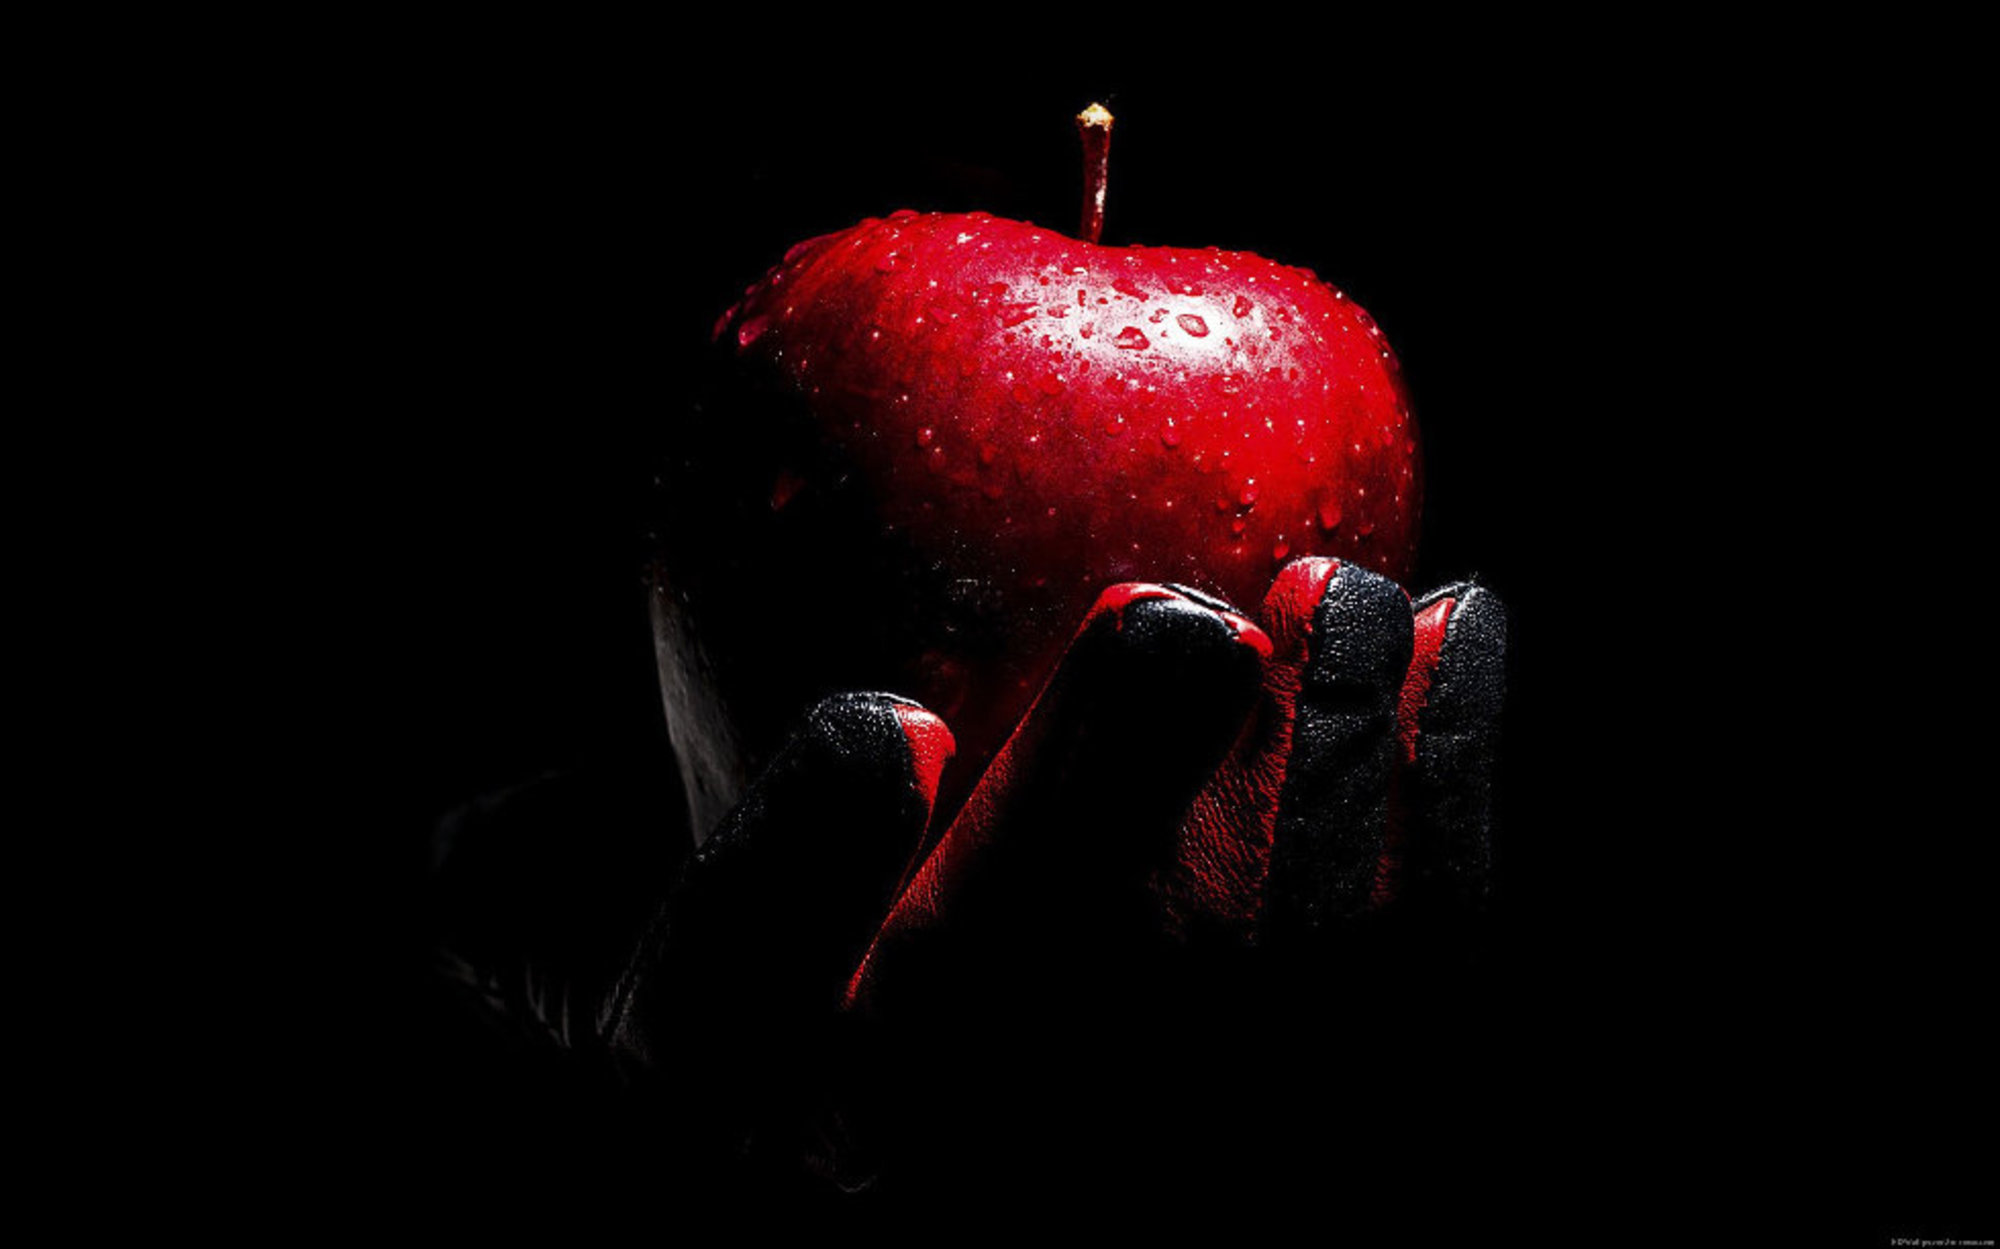 Яблоко на черном фоне. Яблоко на темном фоне. Черный фон картинка. Красное яблоко на черном фоне.